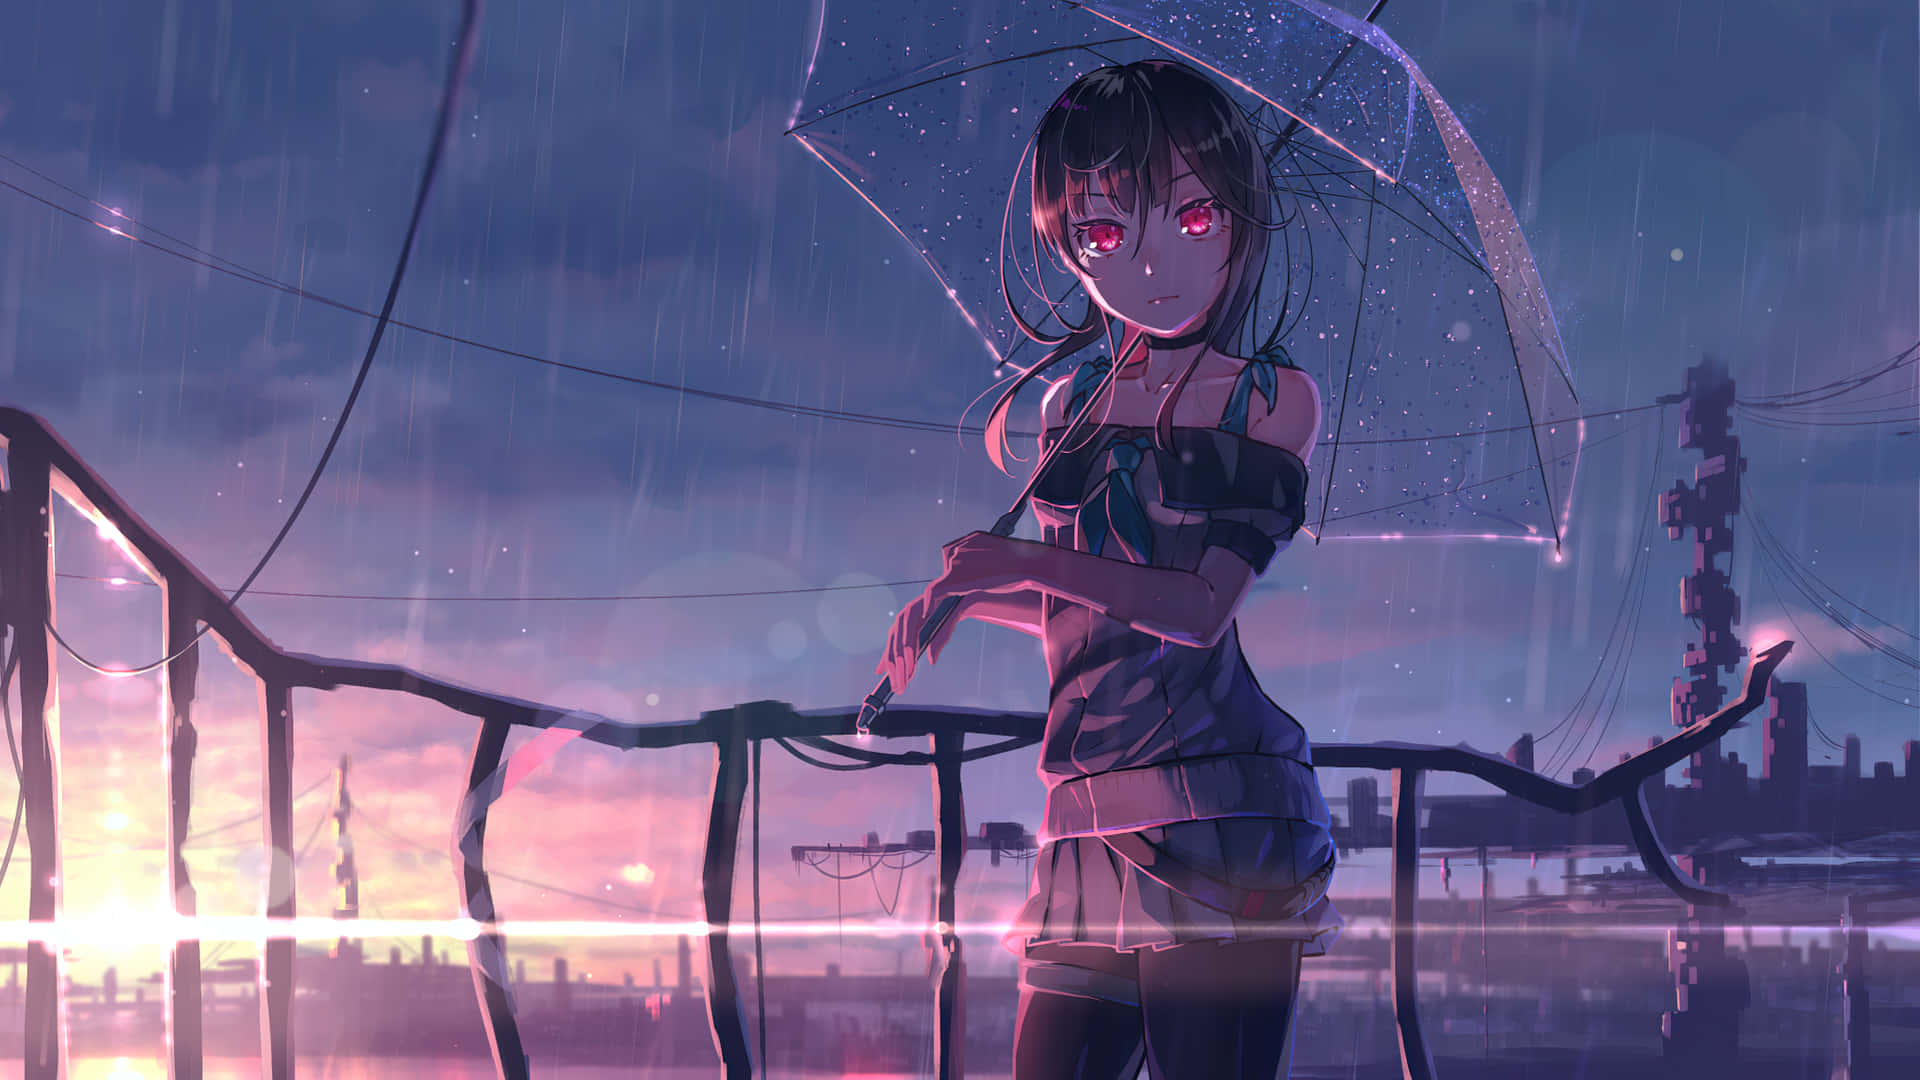 1920x1080 Anime Girl In Rain Wallpaper